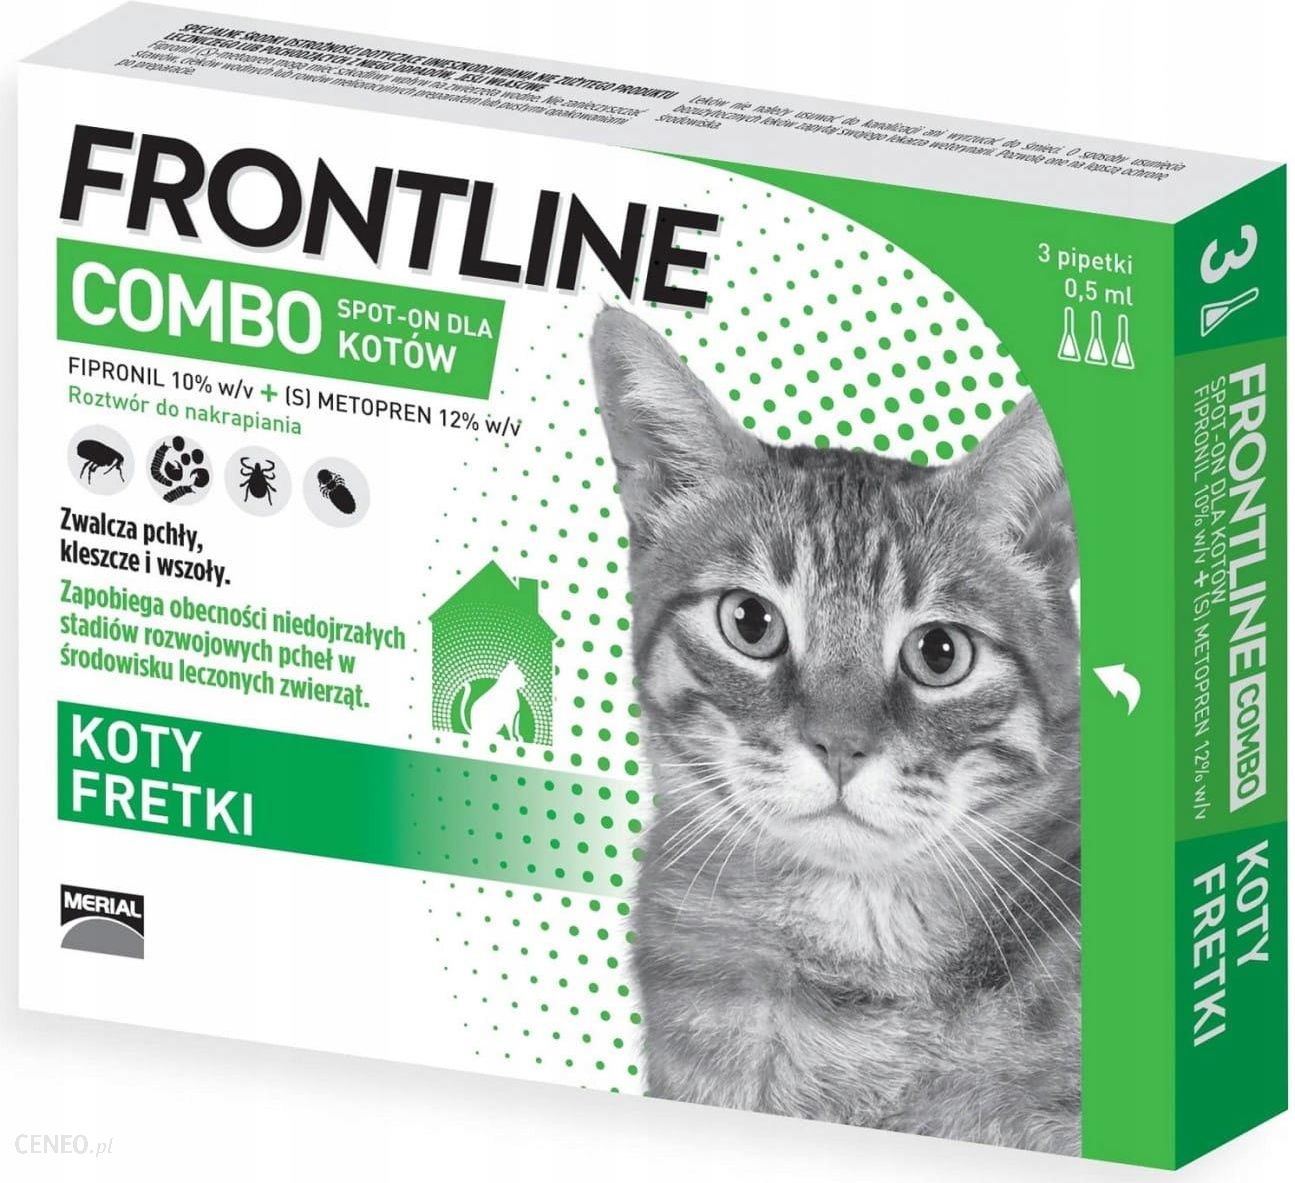 Frontline Combo Spot-On Dla Kotów Pipeta 0,5Ml - Ceny i opinie - Ceneo.pl